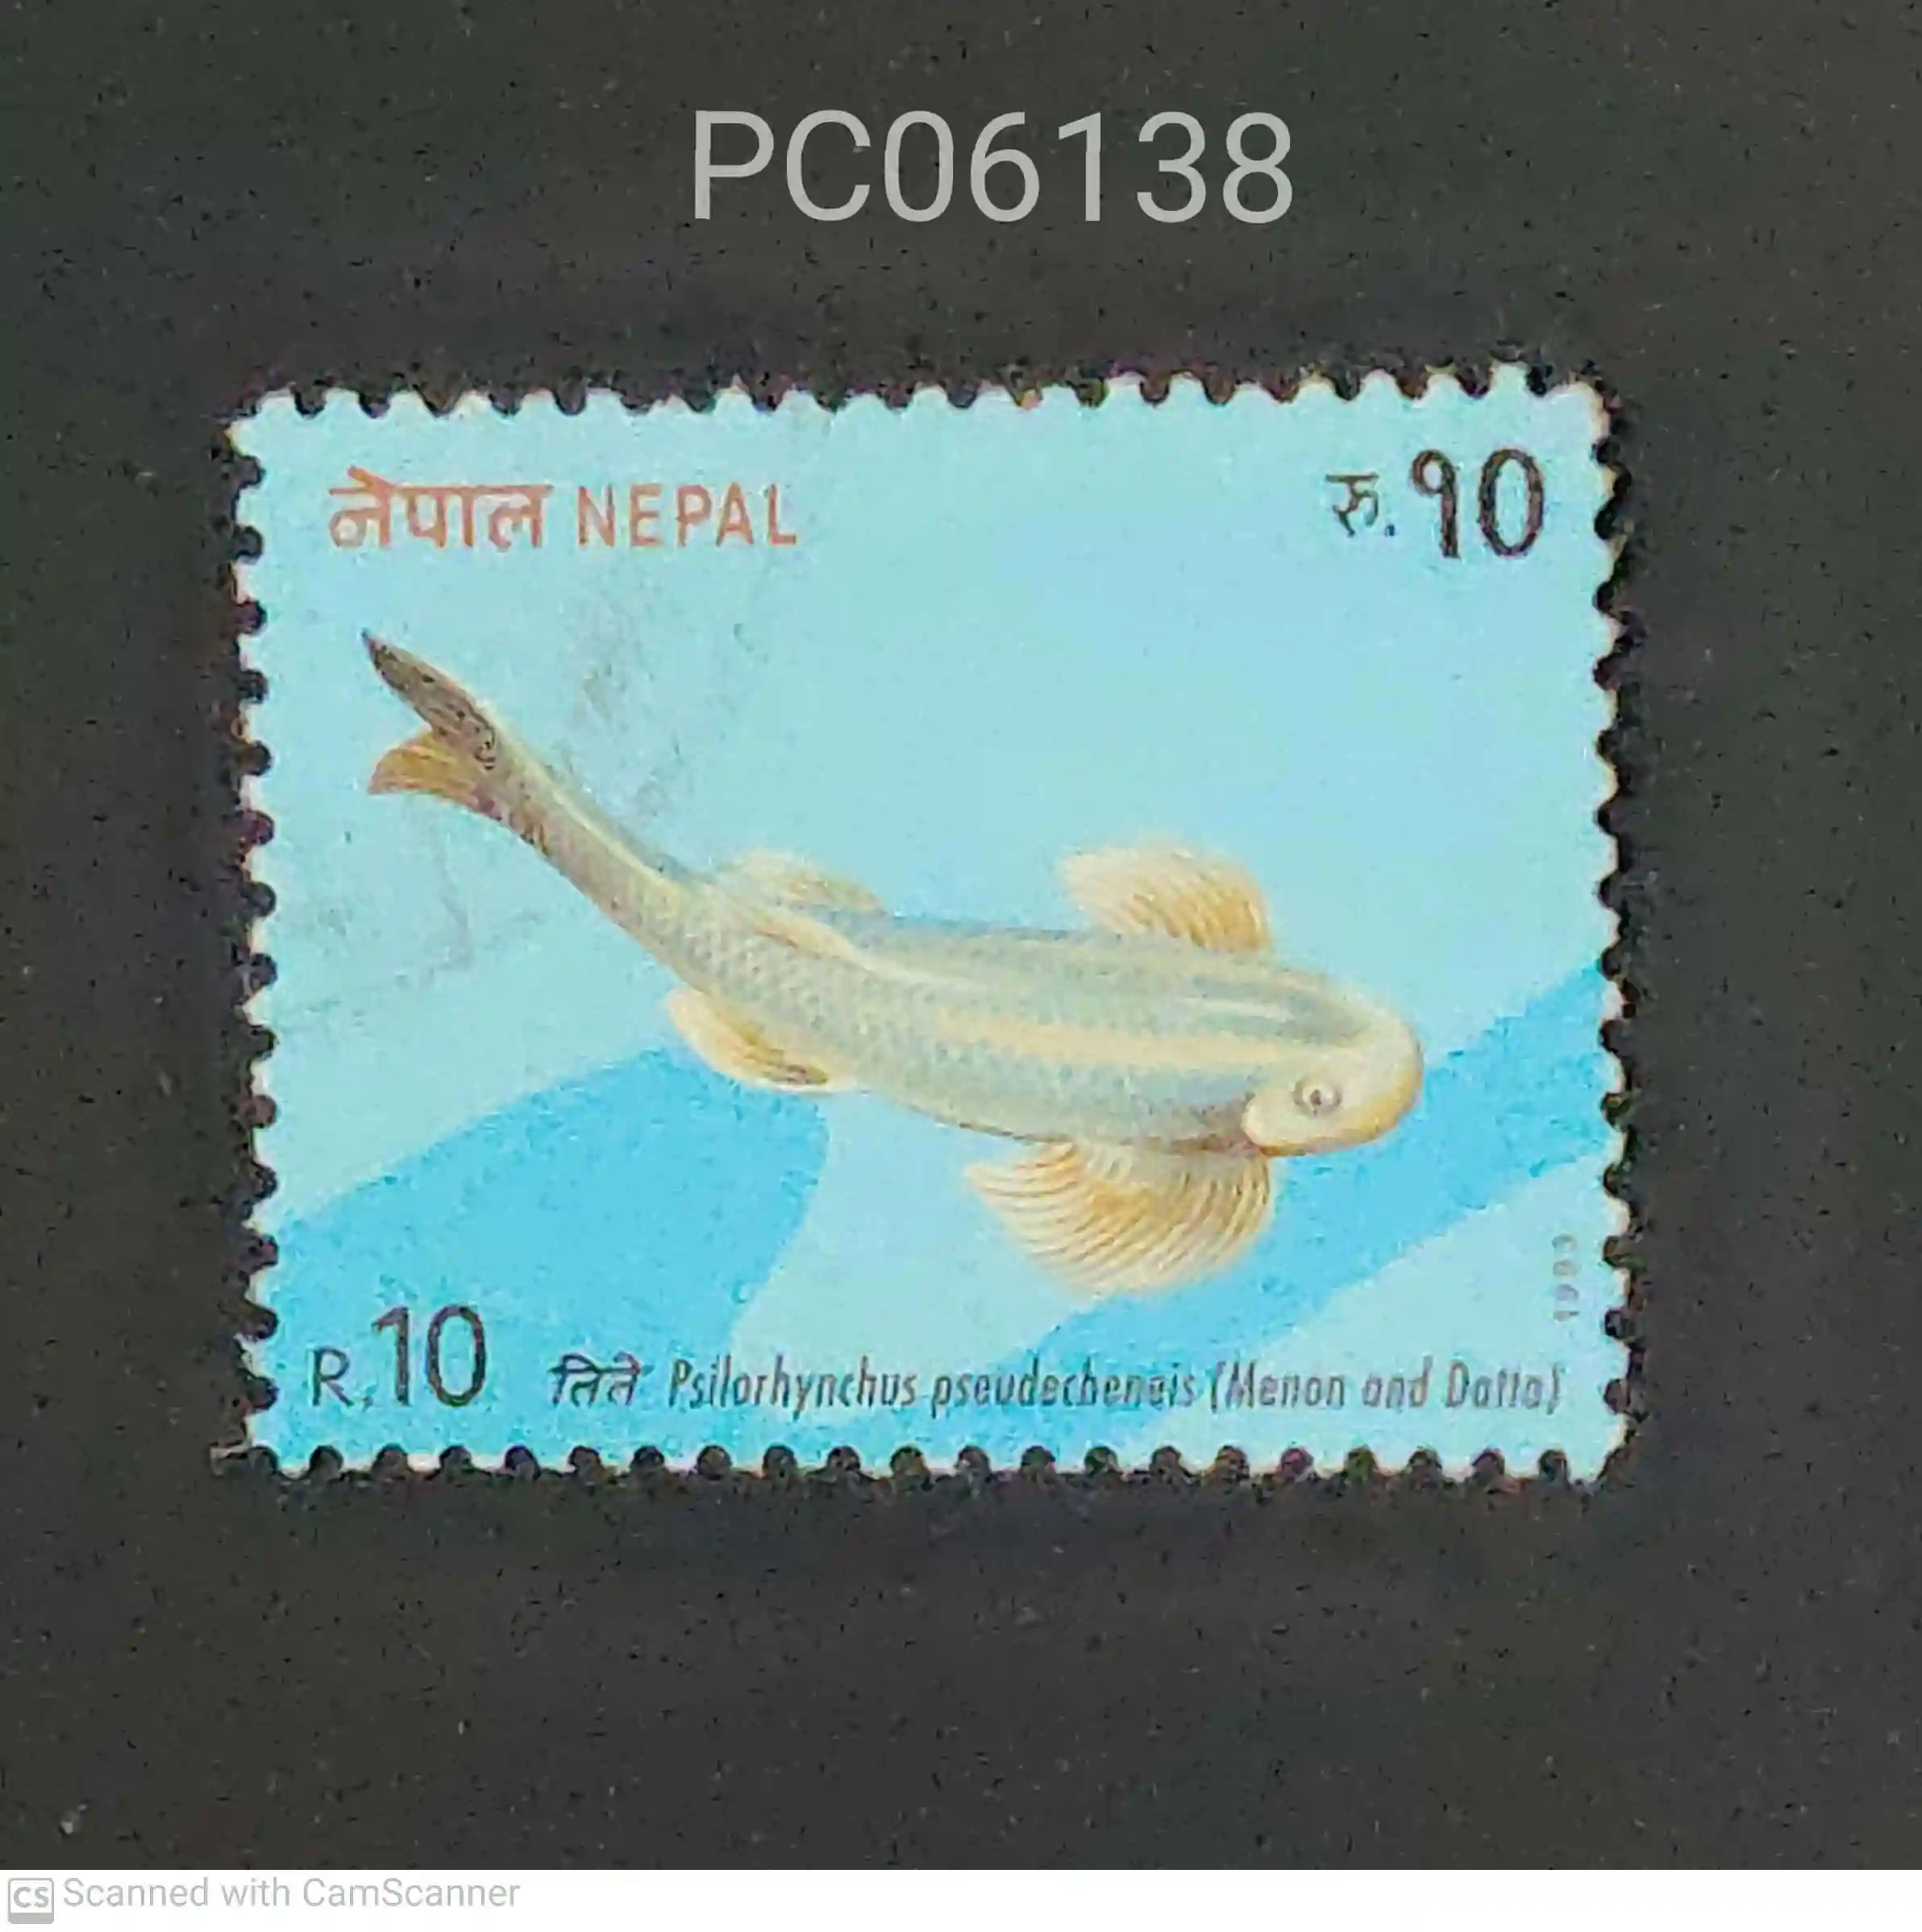 Nepal Nepalese Minnow (Psilorhynchus pseudocheneis) Fish Used PC06138